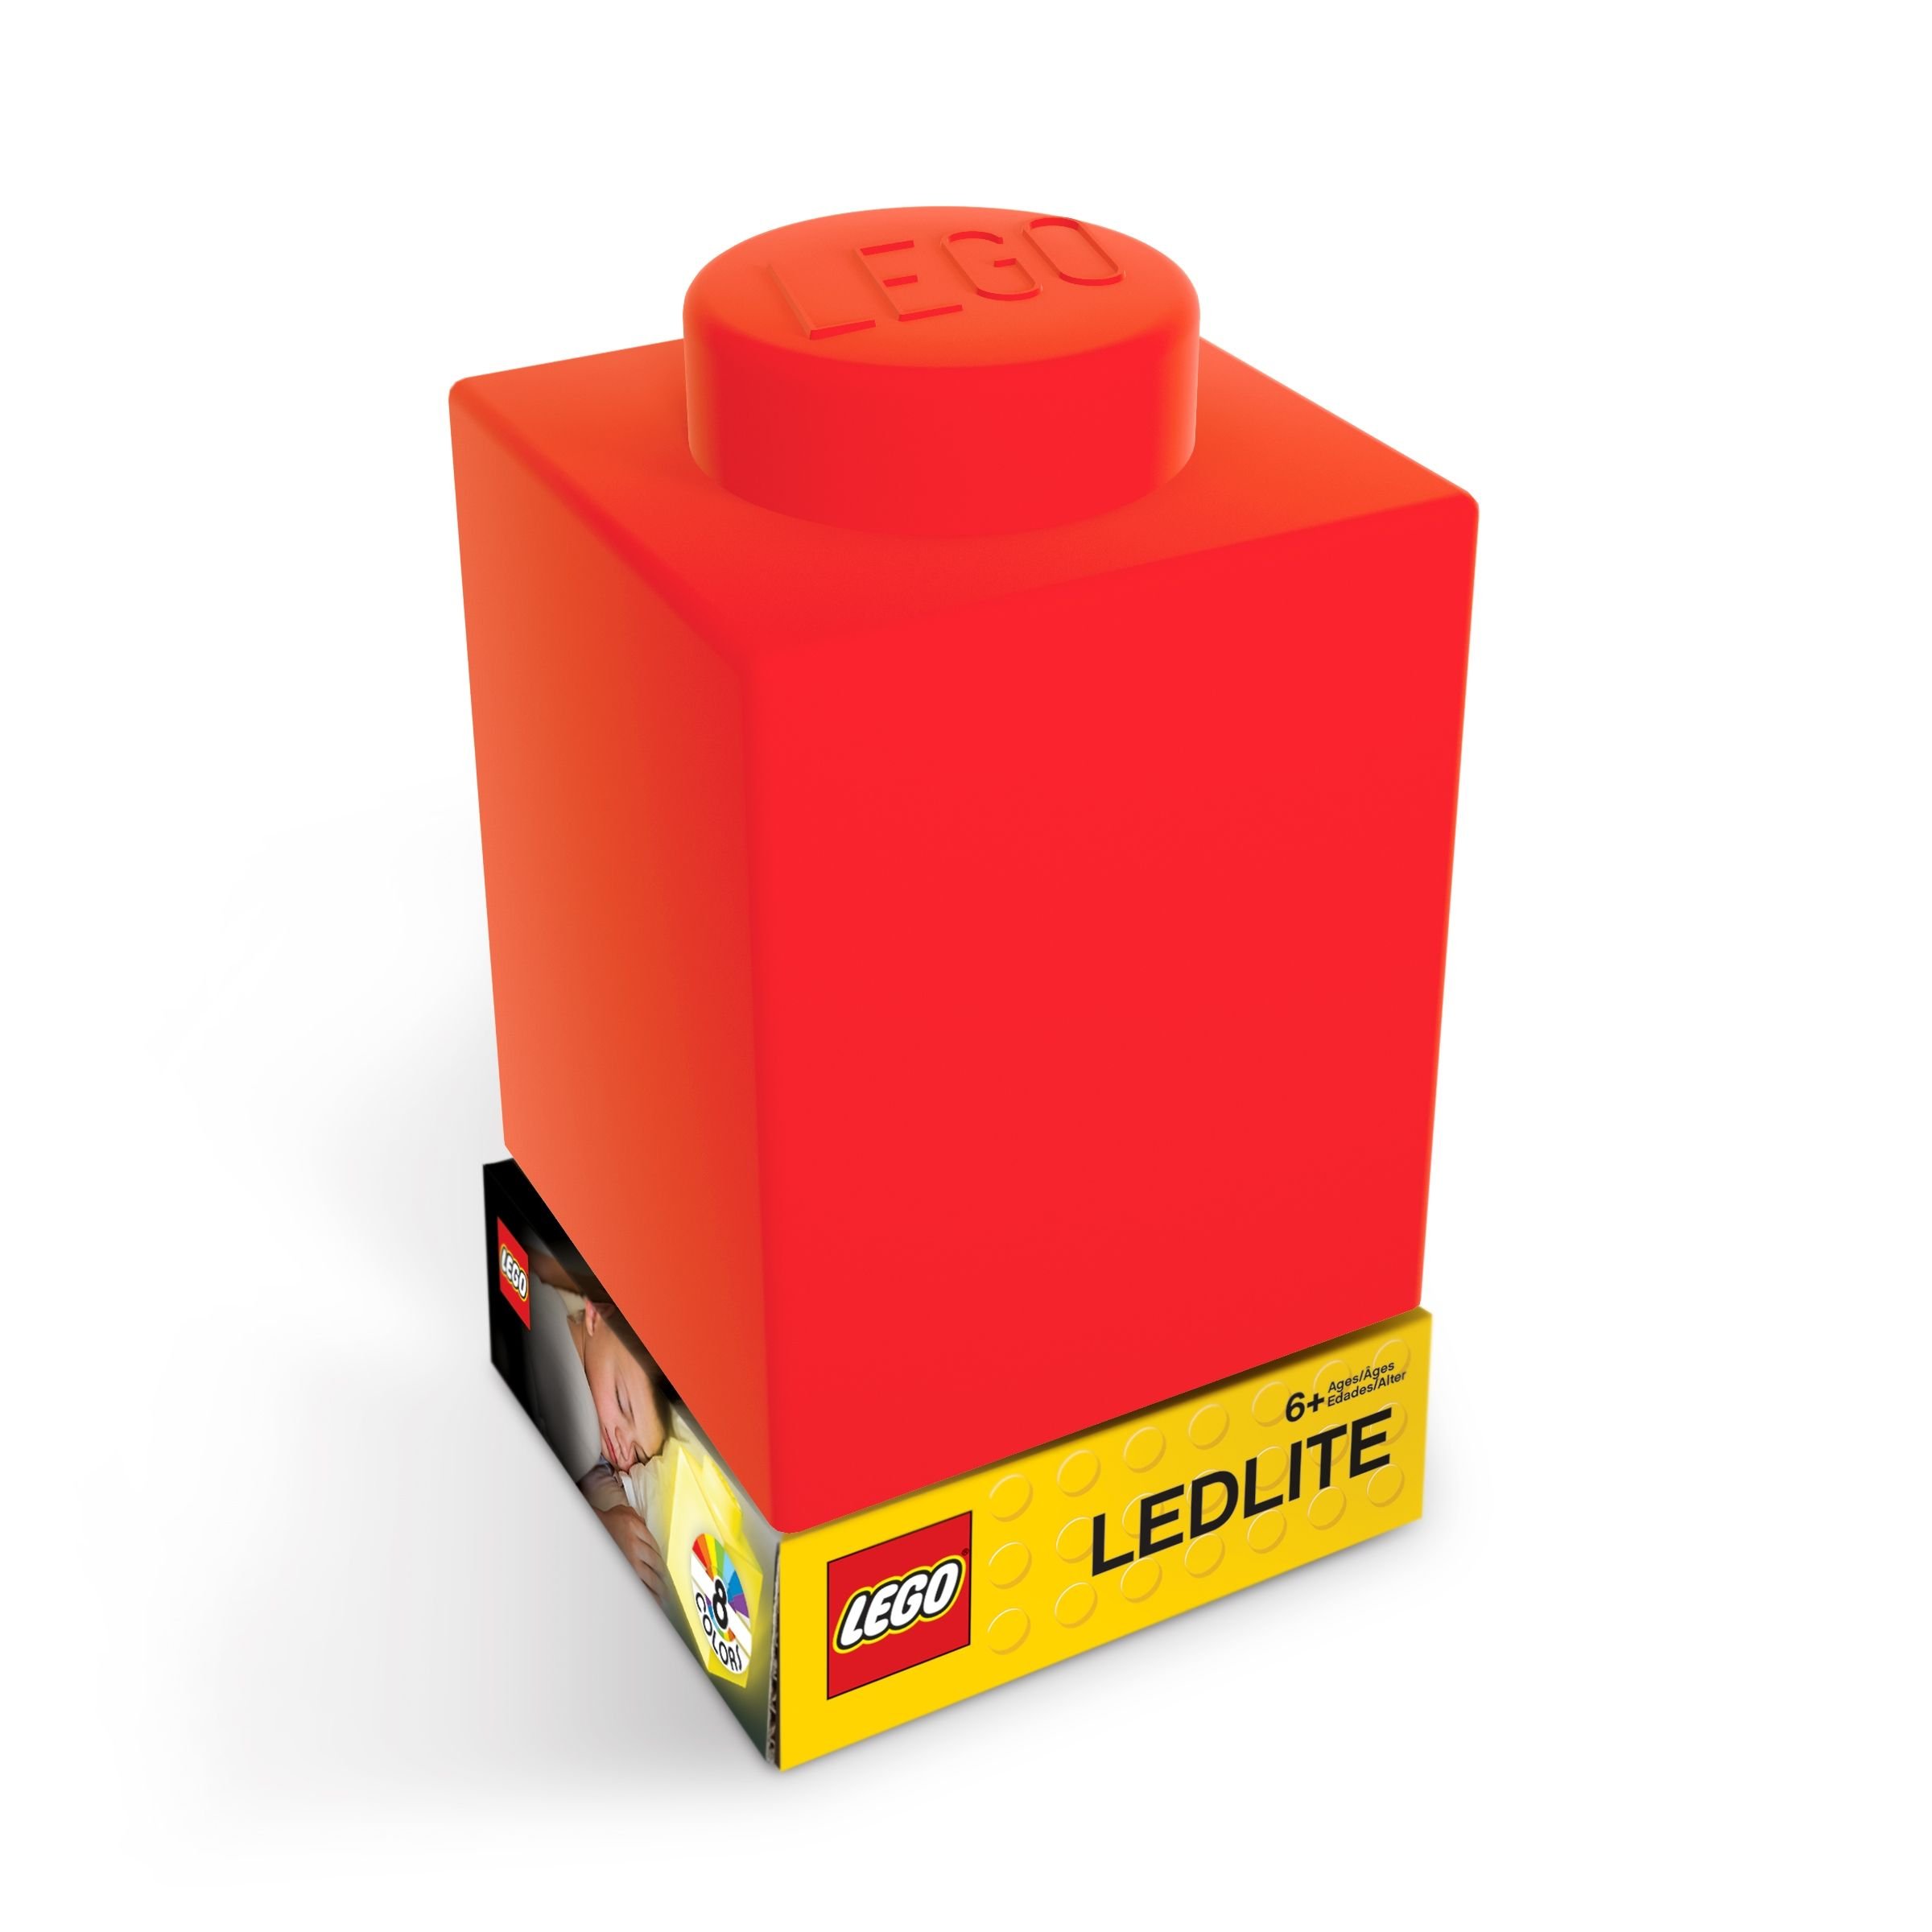 LEGO Gear 5007231 1x1 Stein-Nachtlicht – Rot LEGO_5007231_alt1.jpg